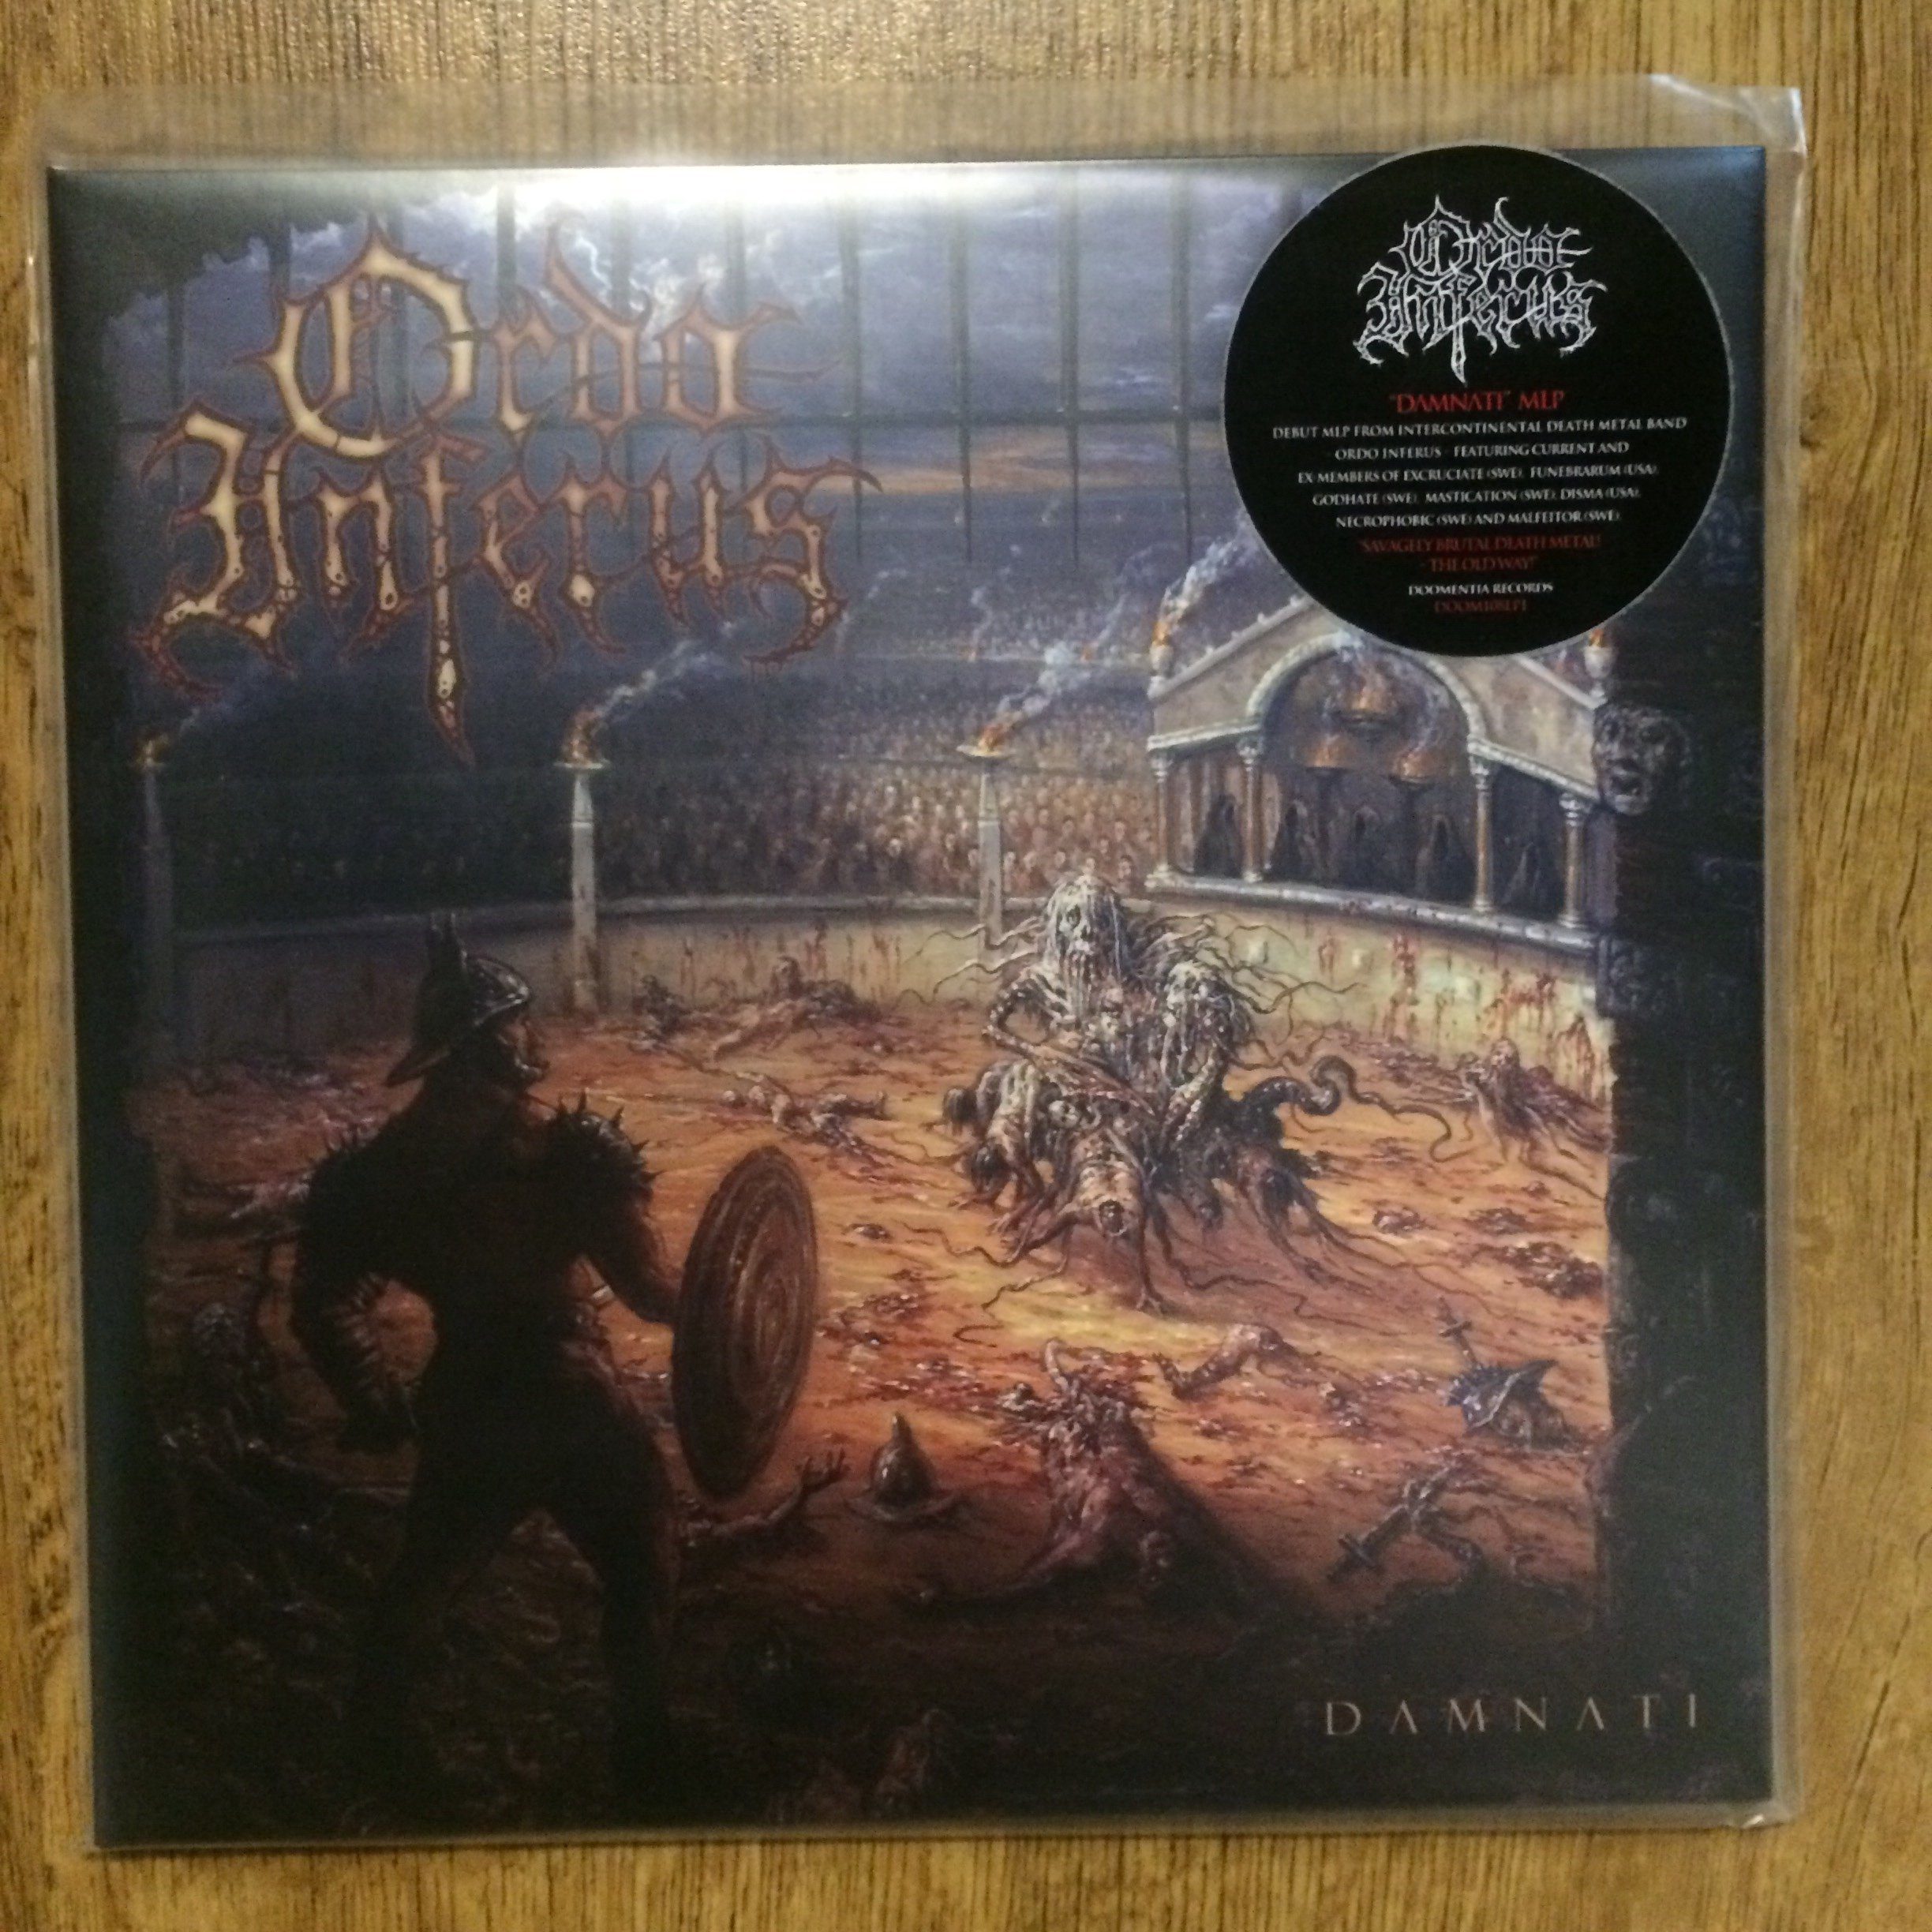 Photo of the Ordo Inferus - "Damnati" 10" (Black vinyl)